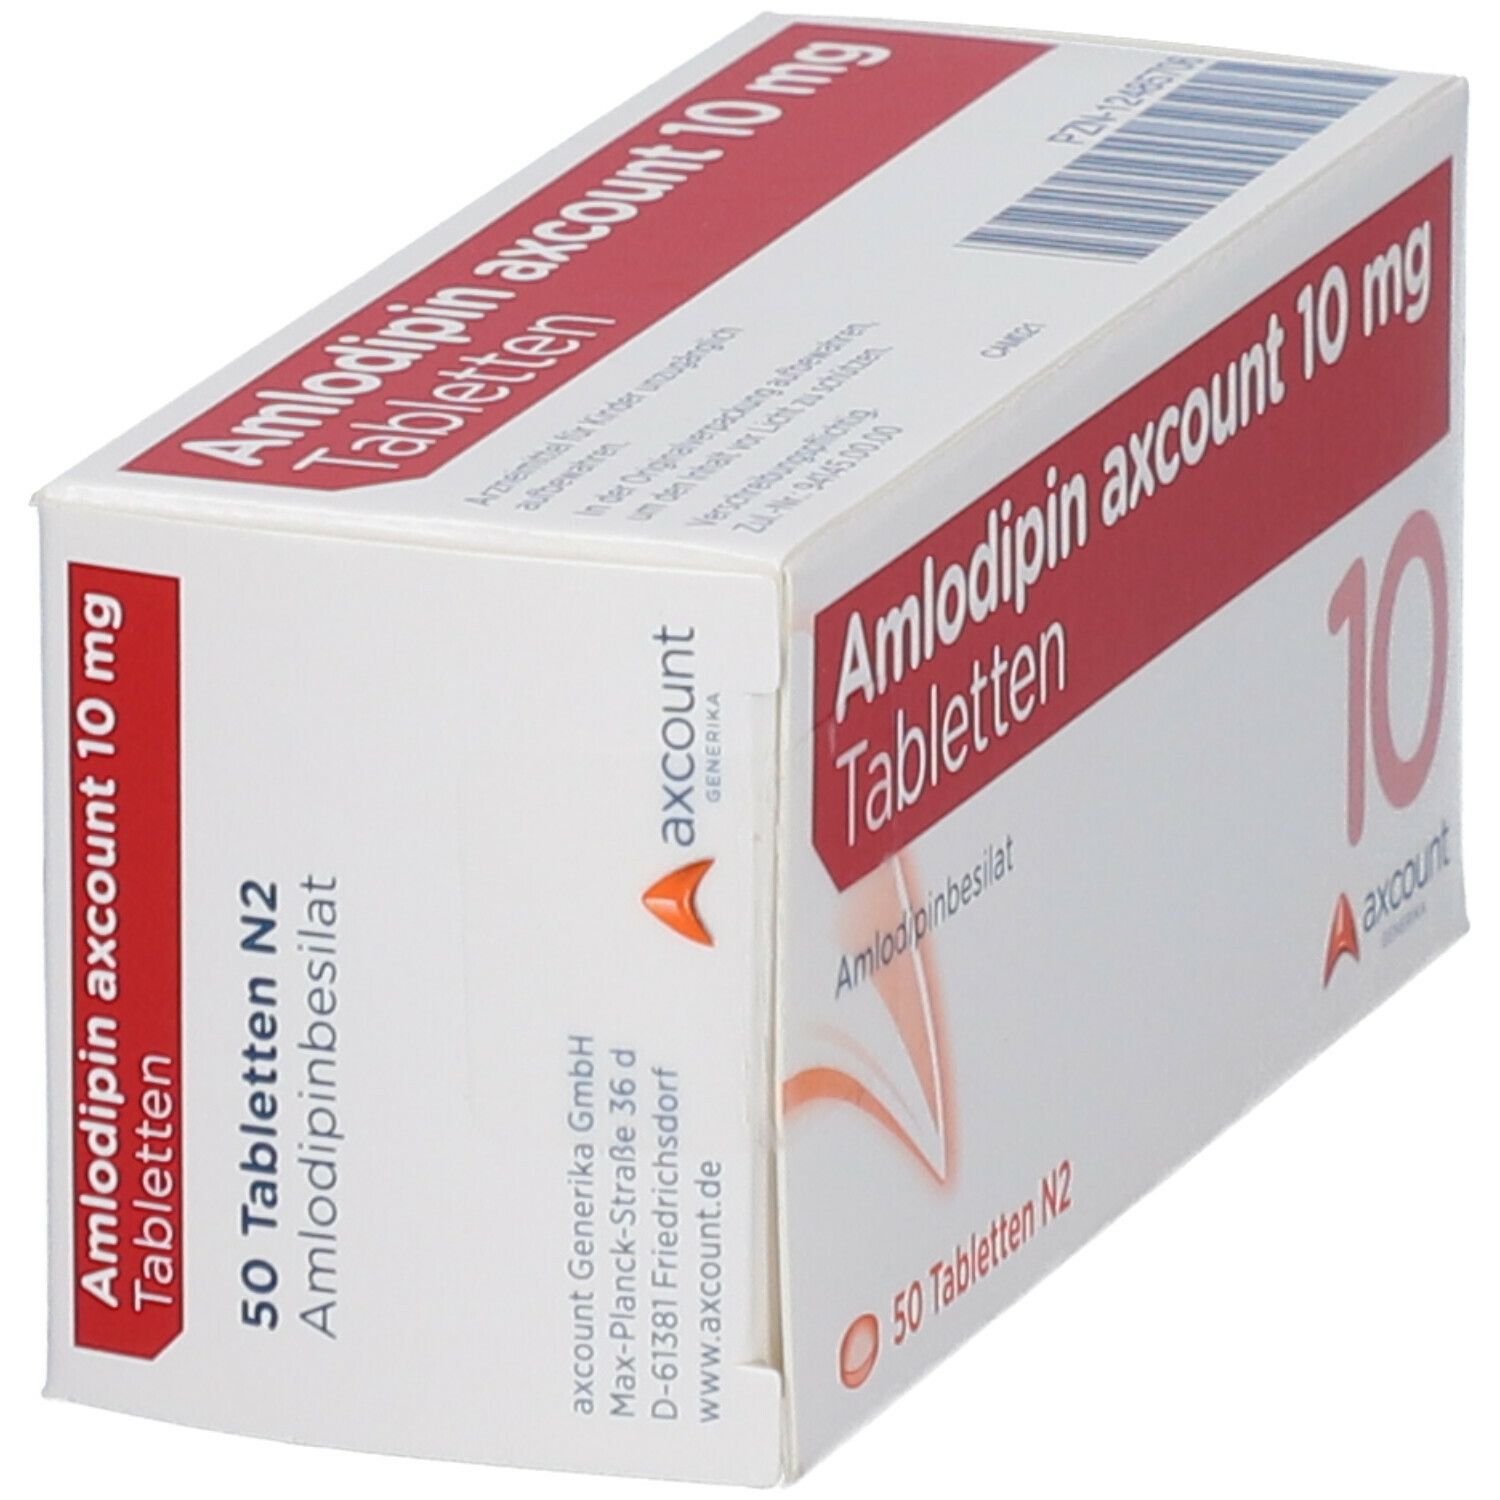 Amlodipin axcount 10 mg